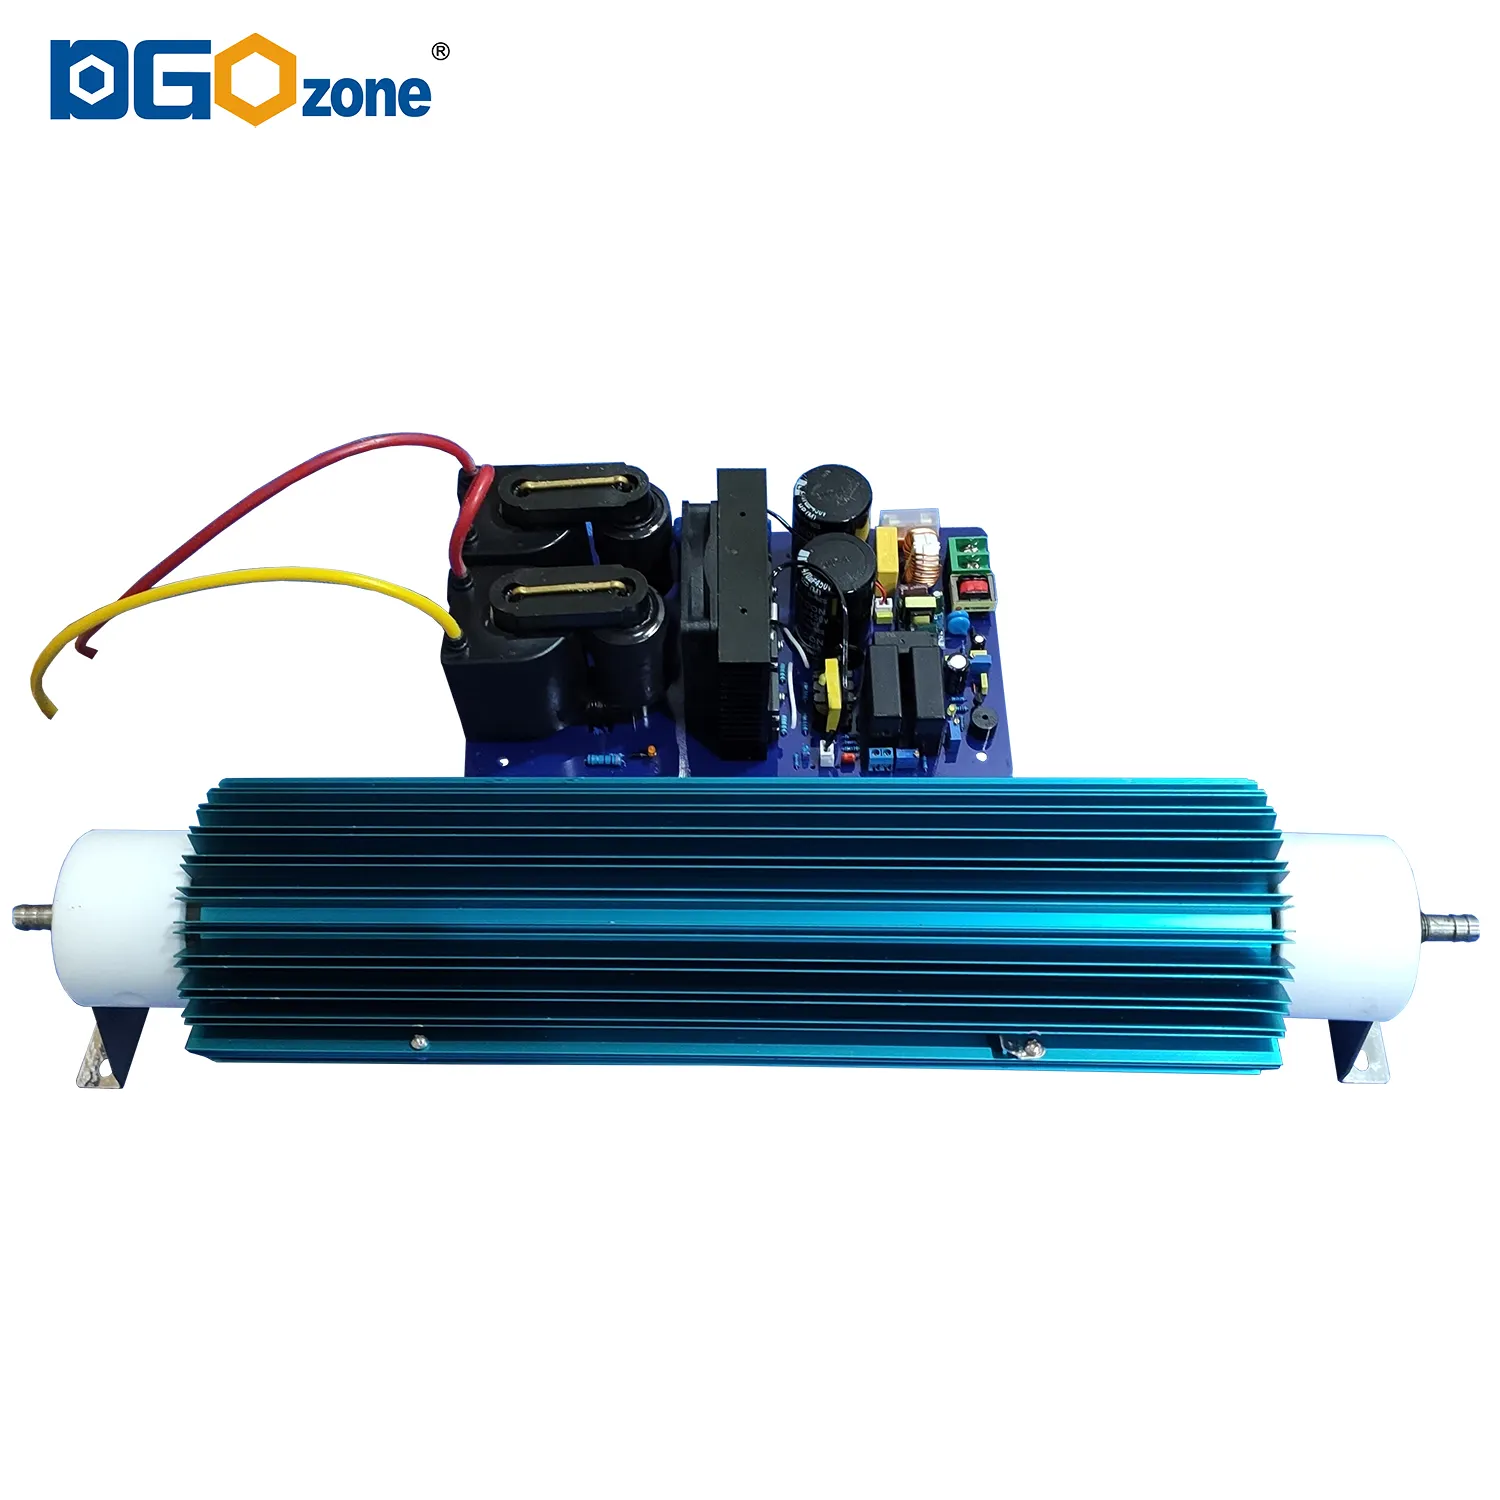 DGOzone 50g ozon jeneratörü su dezenfeksiyon 50 g/sa için ayarlanabilir ozon jeneratörü su arıtma